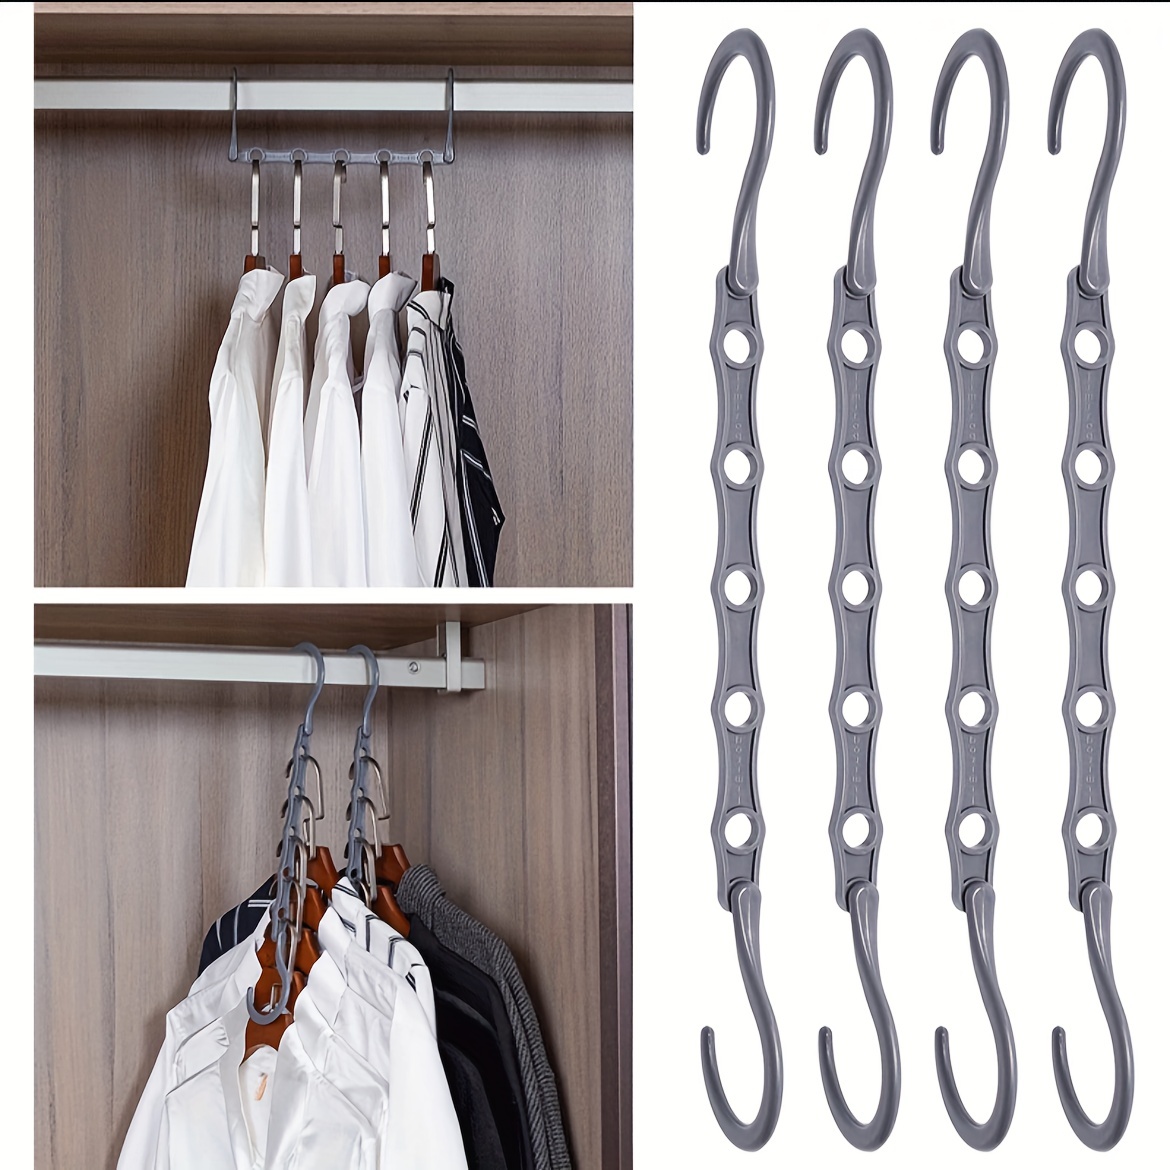 30pcs Stable Hanger Connector Hooks Cascading Clothes Rack Hook